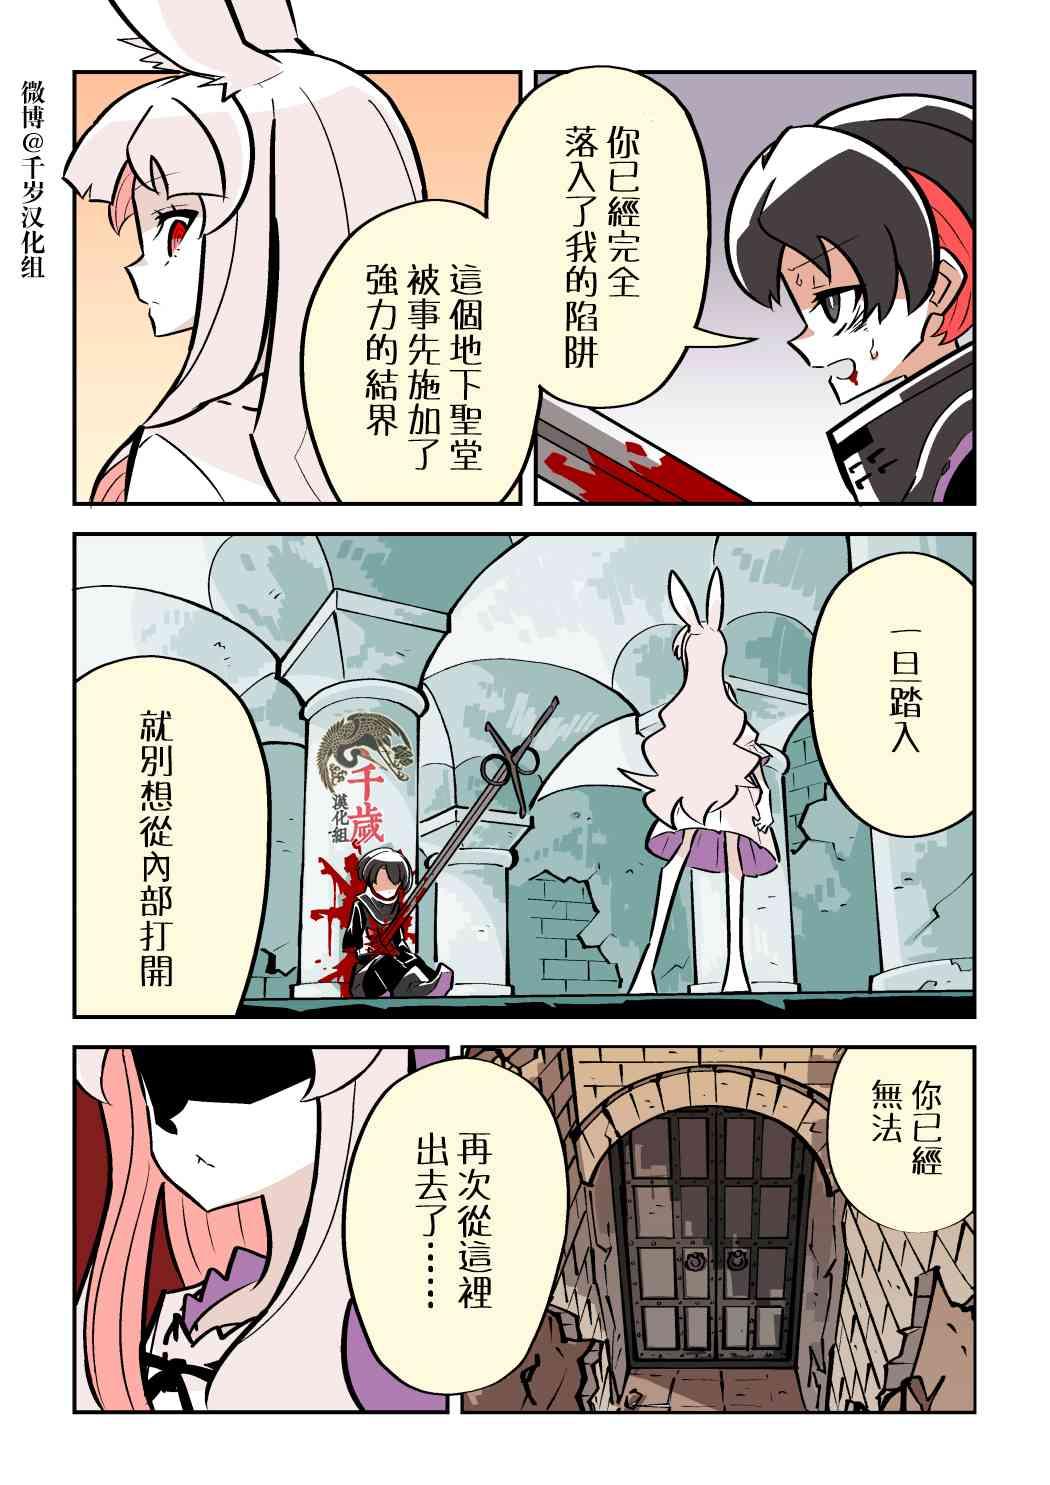 Murder Rabbit Girl vs Series 杀人兔娘 16